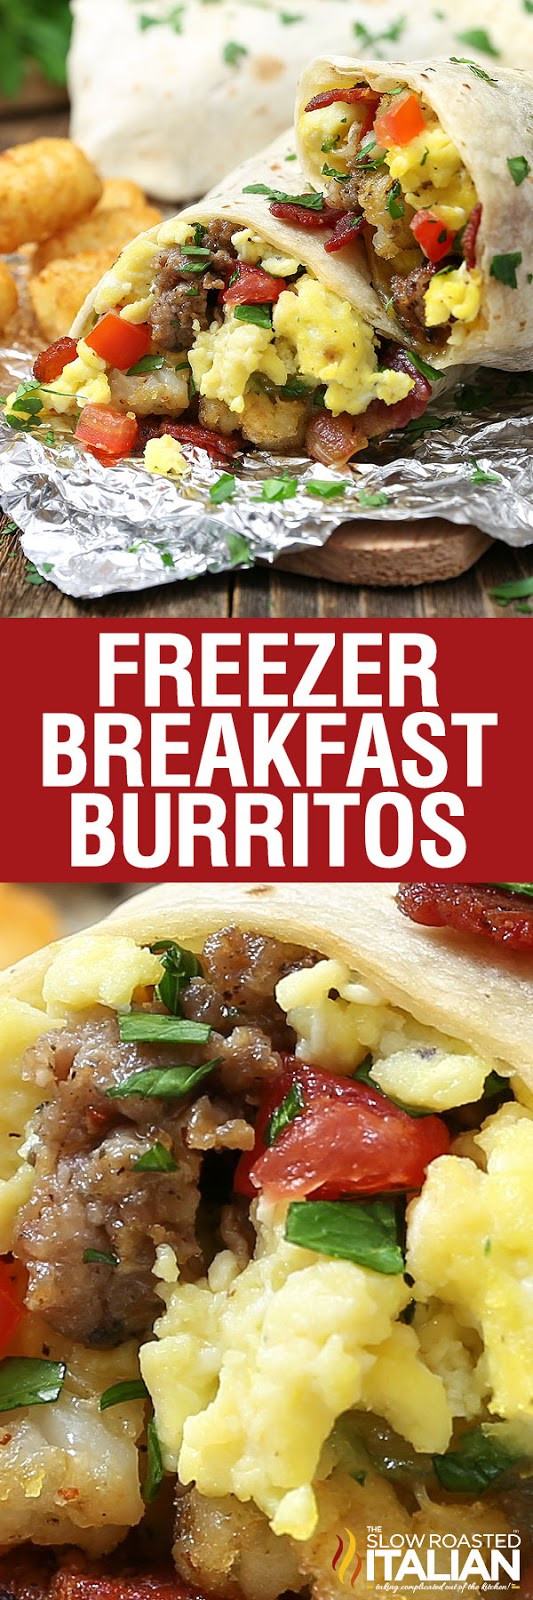 Breakfast Burritos Freezer
 Freezer Breakfast Burritos